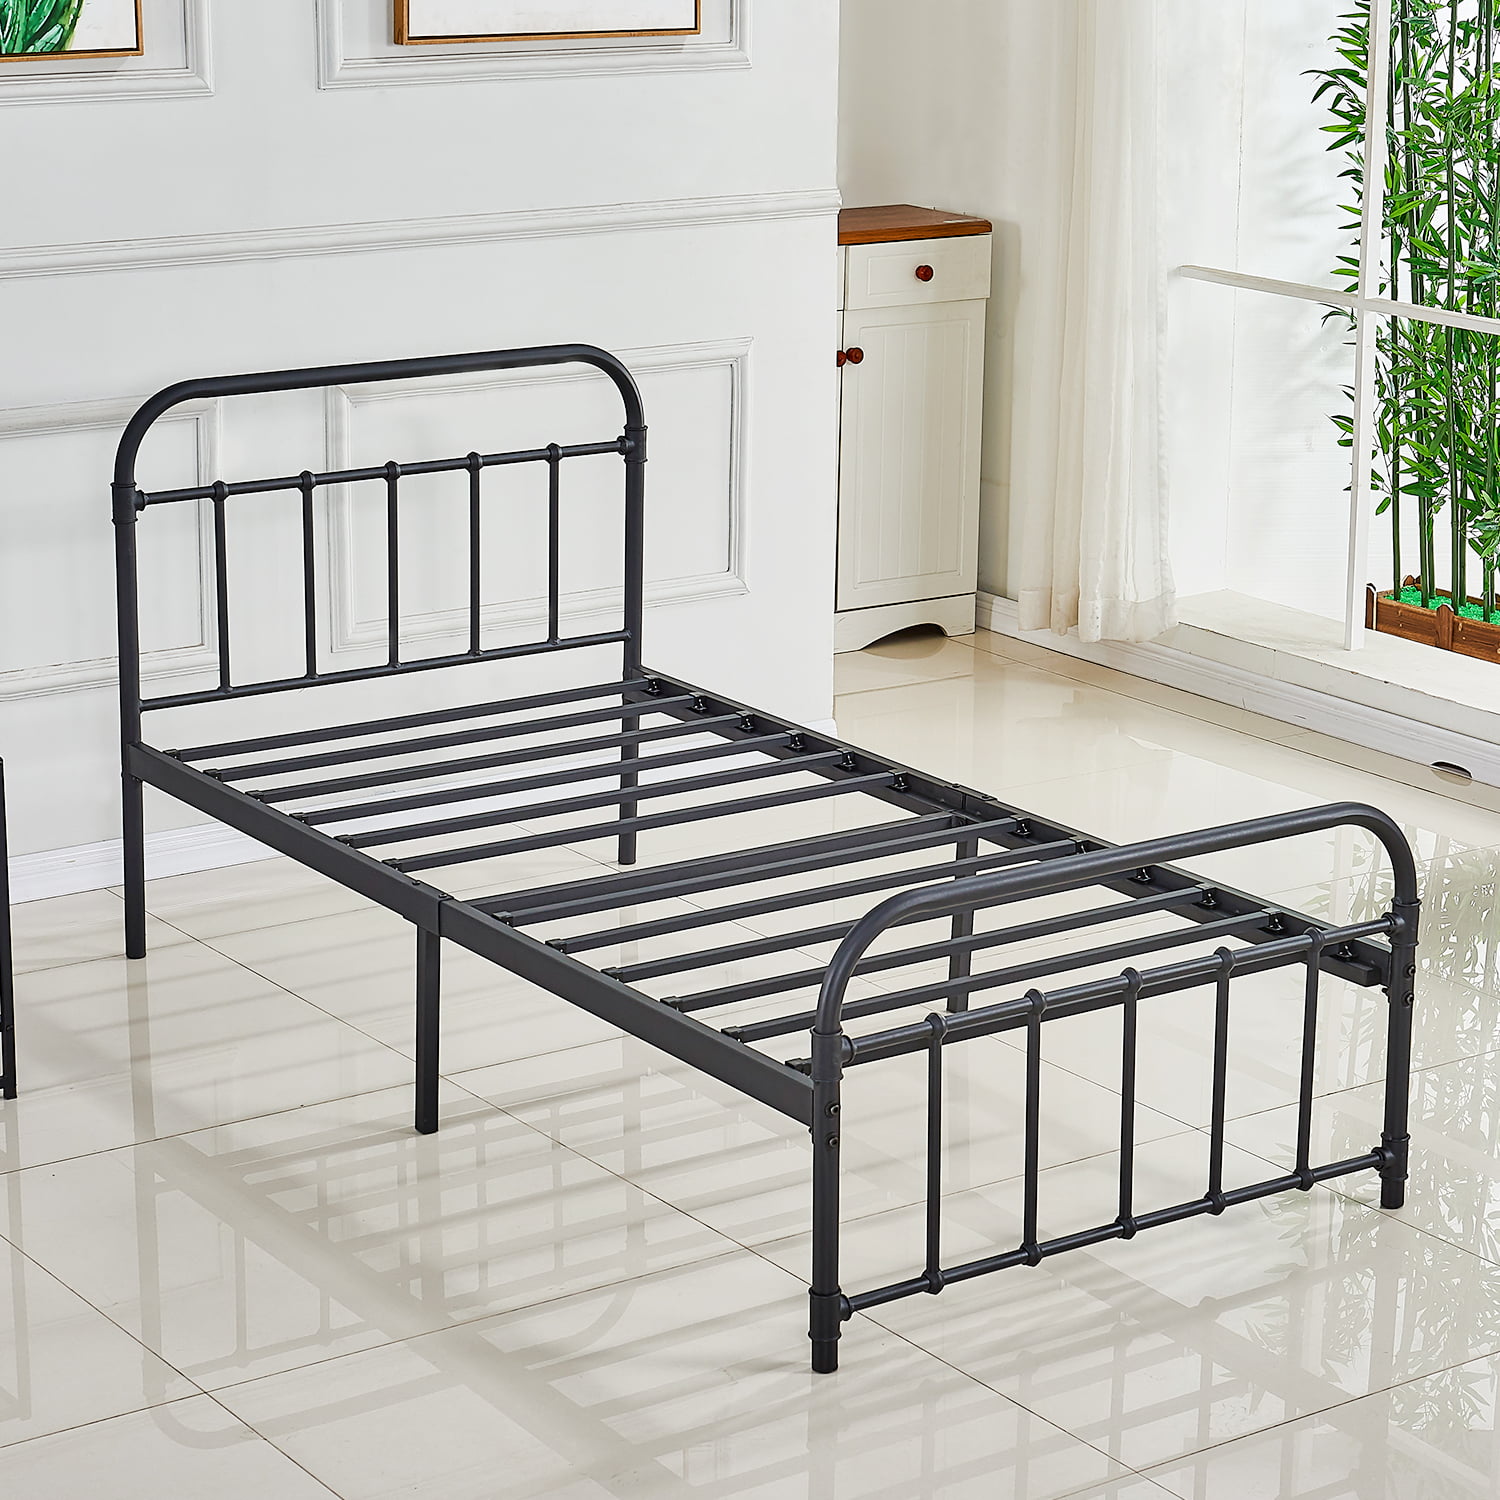 Dikapa Twin Size Bed Frame Base Metal, Metal Twin Bed Frame With Headboard